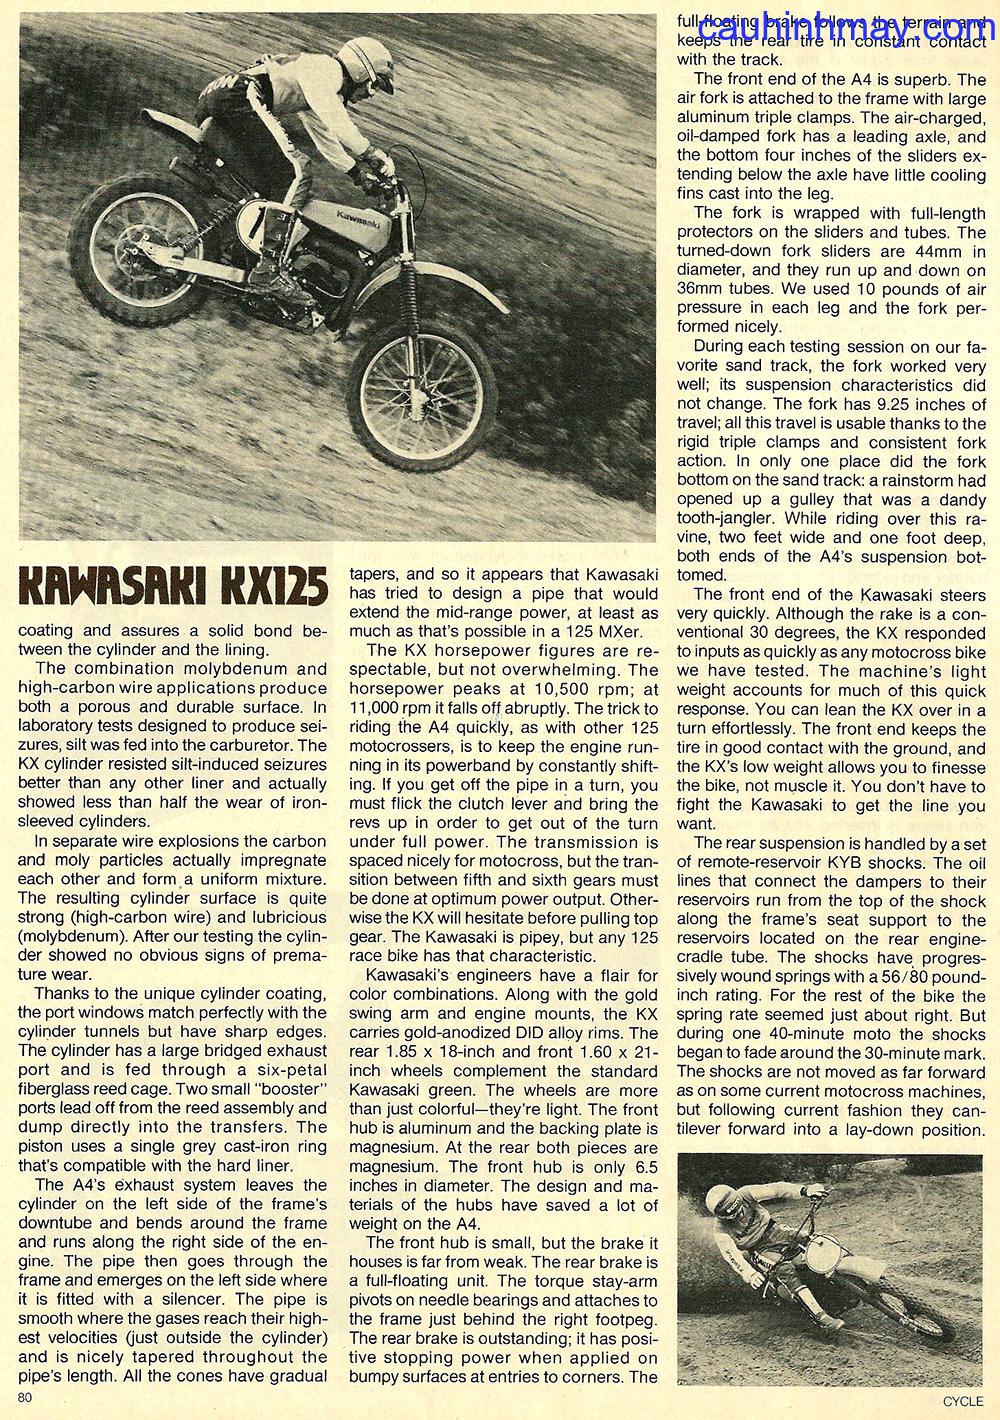 1979 KAWASAKI KX 125 - cauhinhmay.com